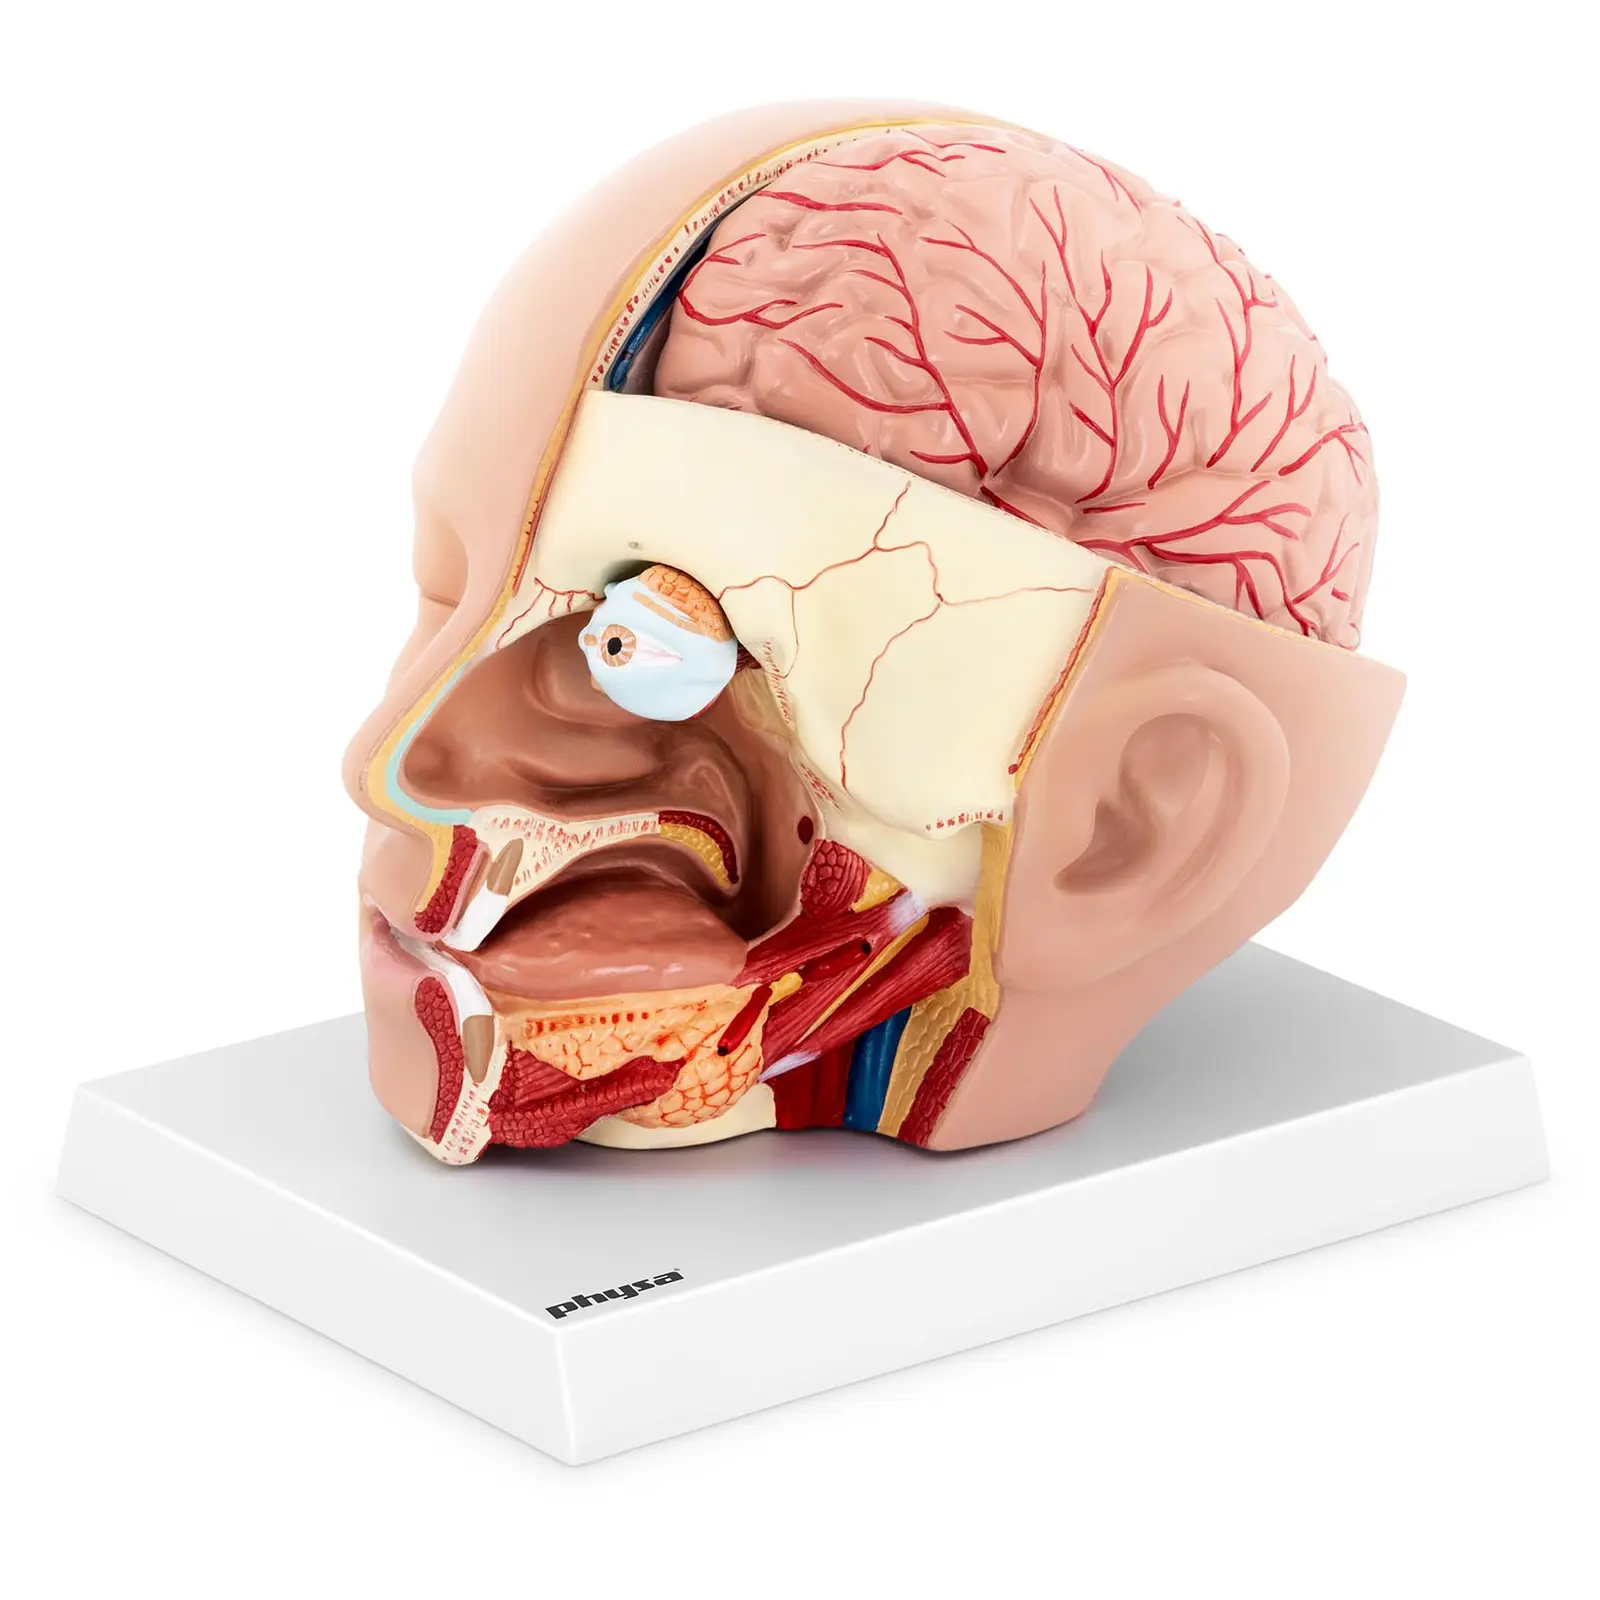 Cabeça e cérebro - modelo anatómico